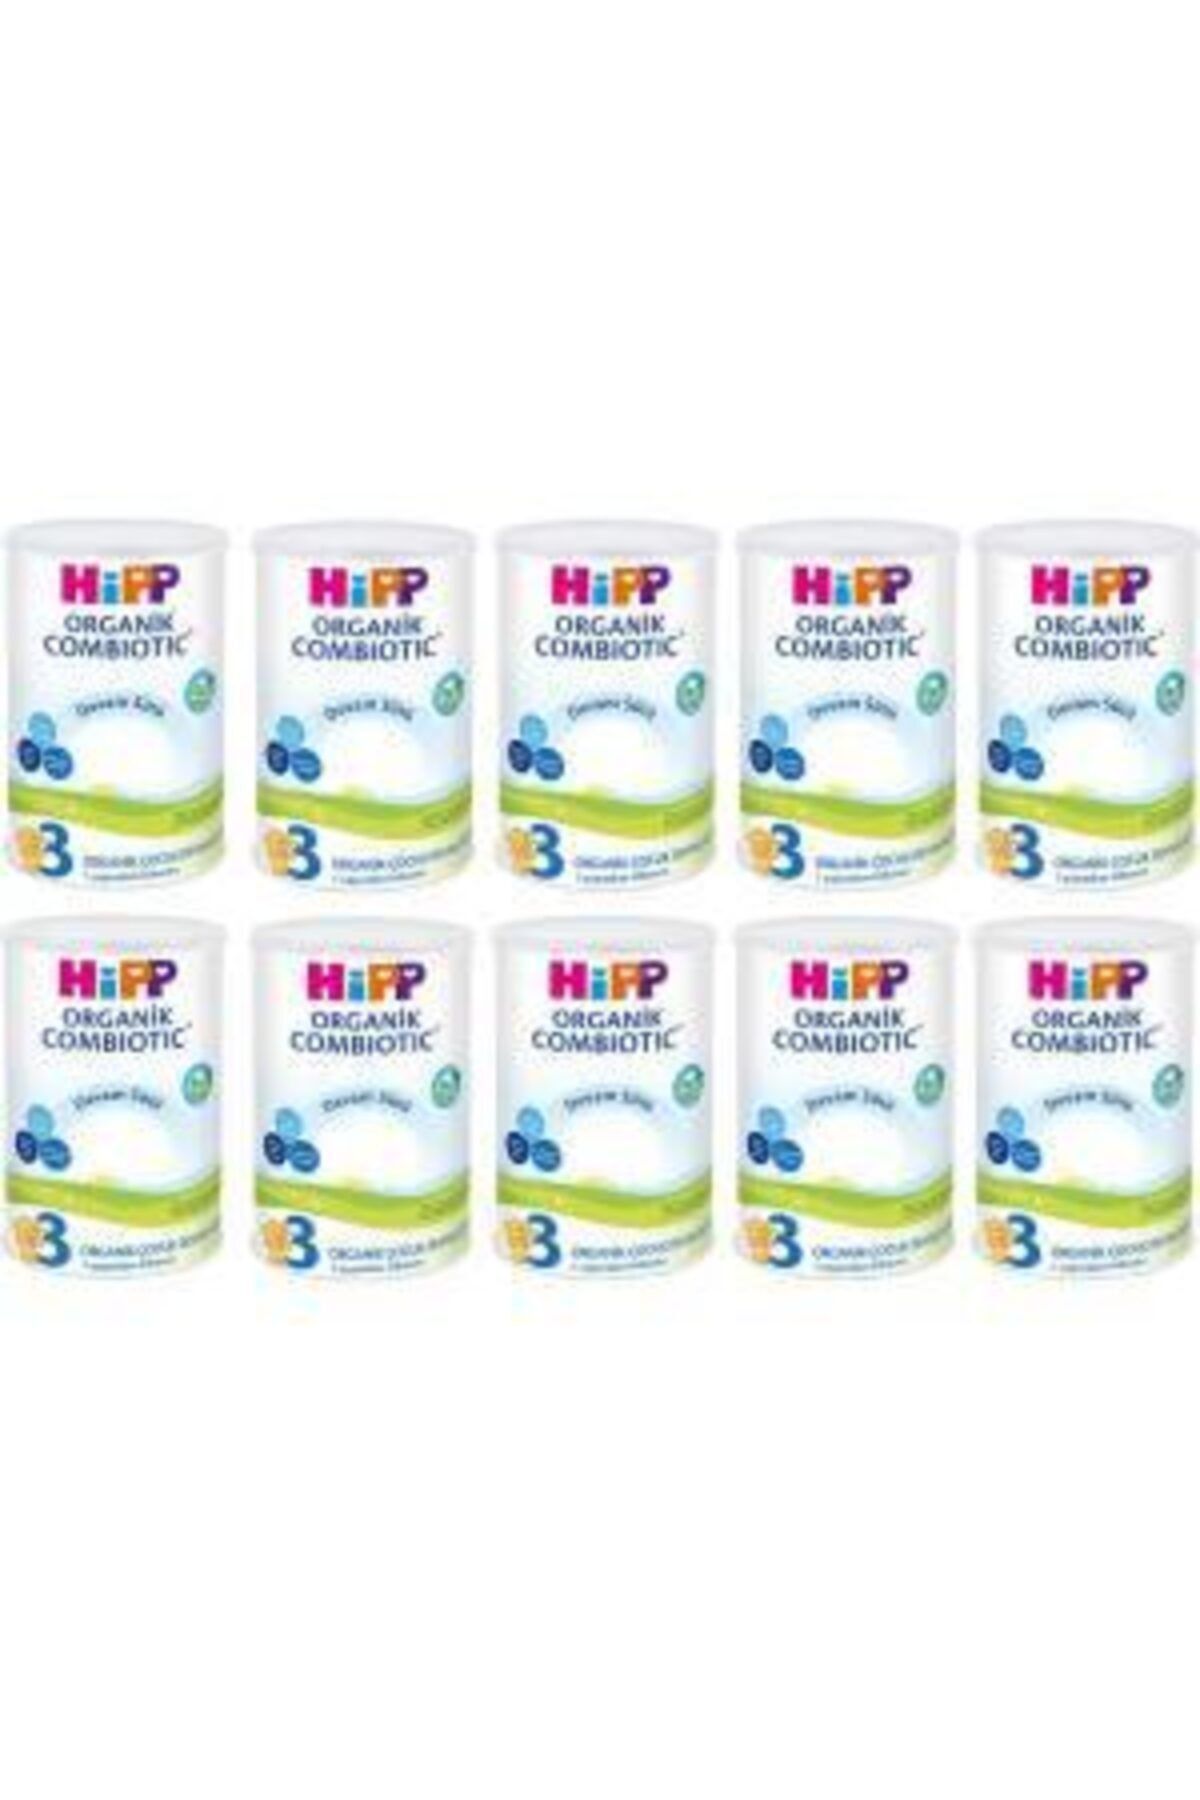 Hipp 3 Organik Combiotic Devam Sütü 350 Gr X 10 Adet